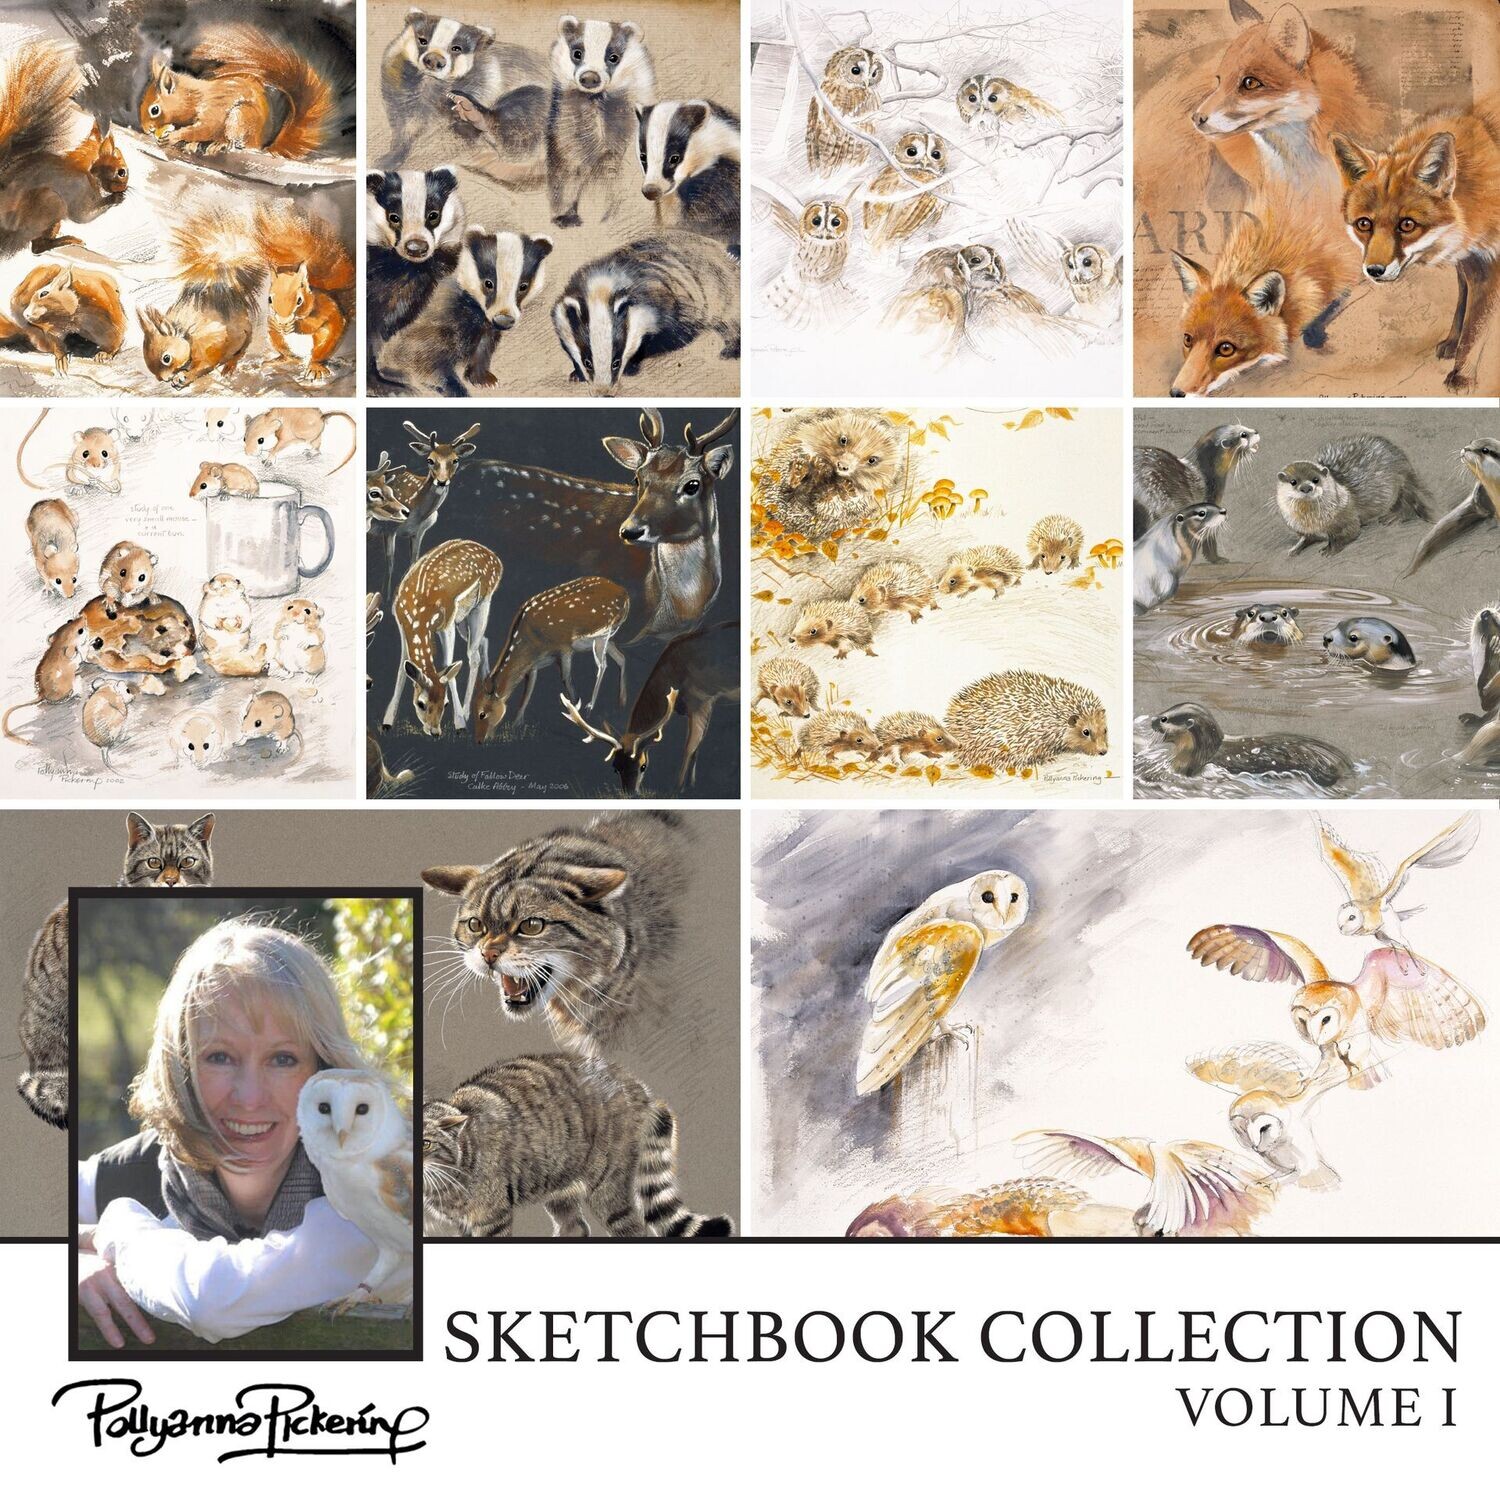 Pollyanna Pickering's Sketch Book Collection Vol I British Wildlife Digital Collection